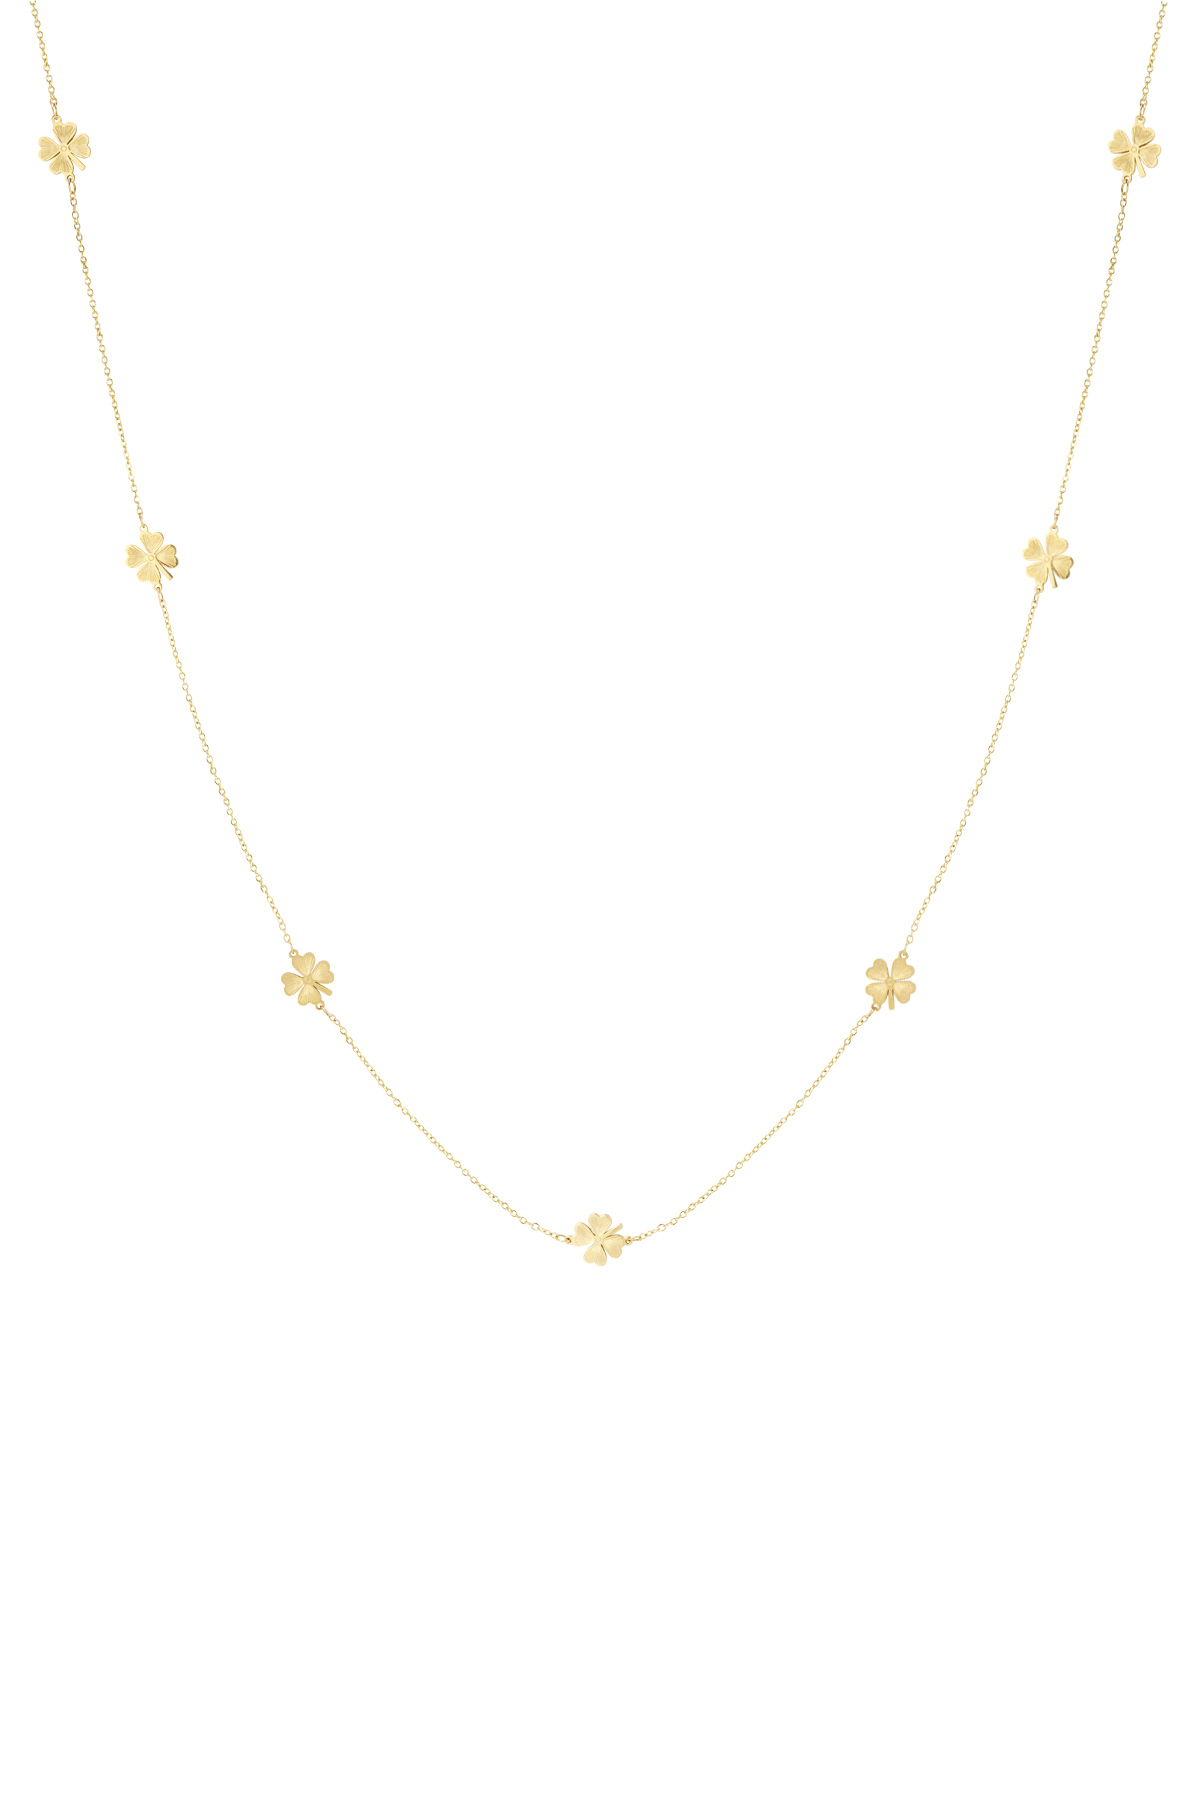 Lange Kleeblatt-Halskette – Gold h5 